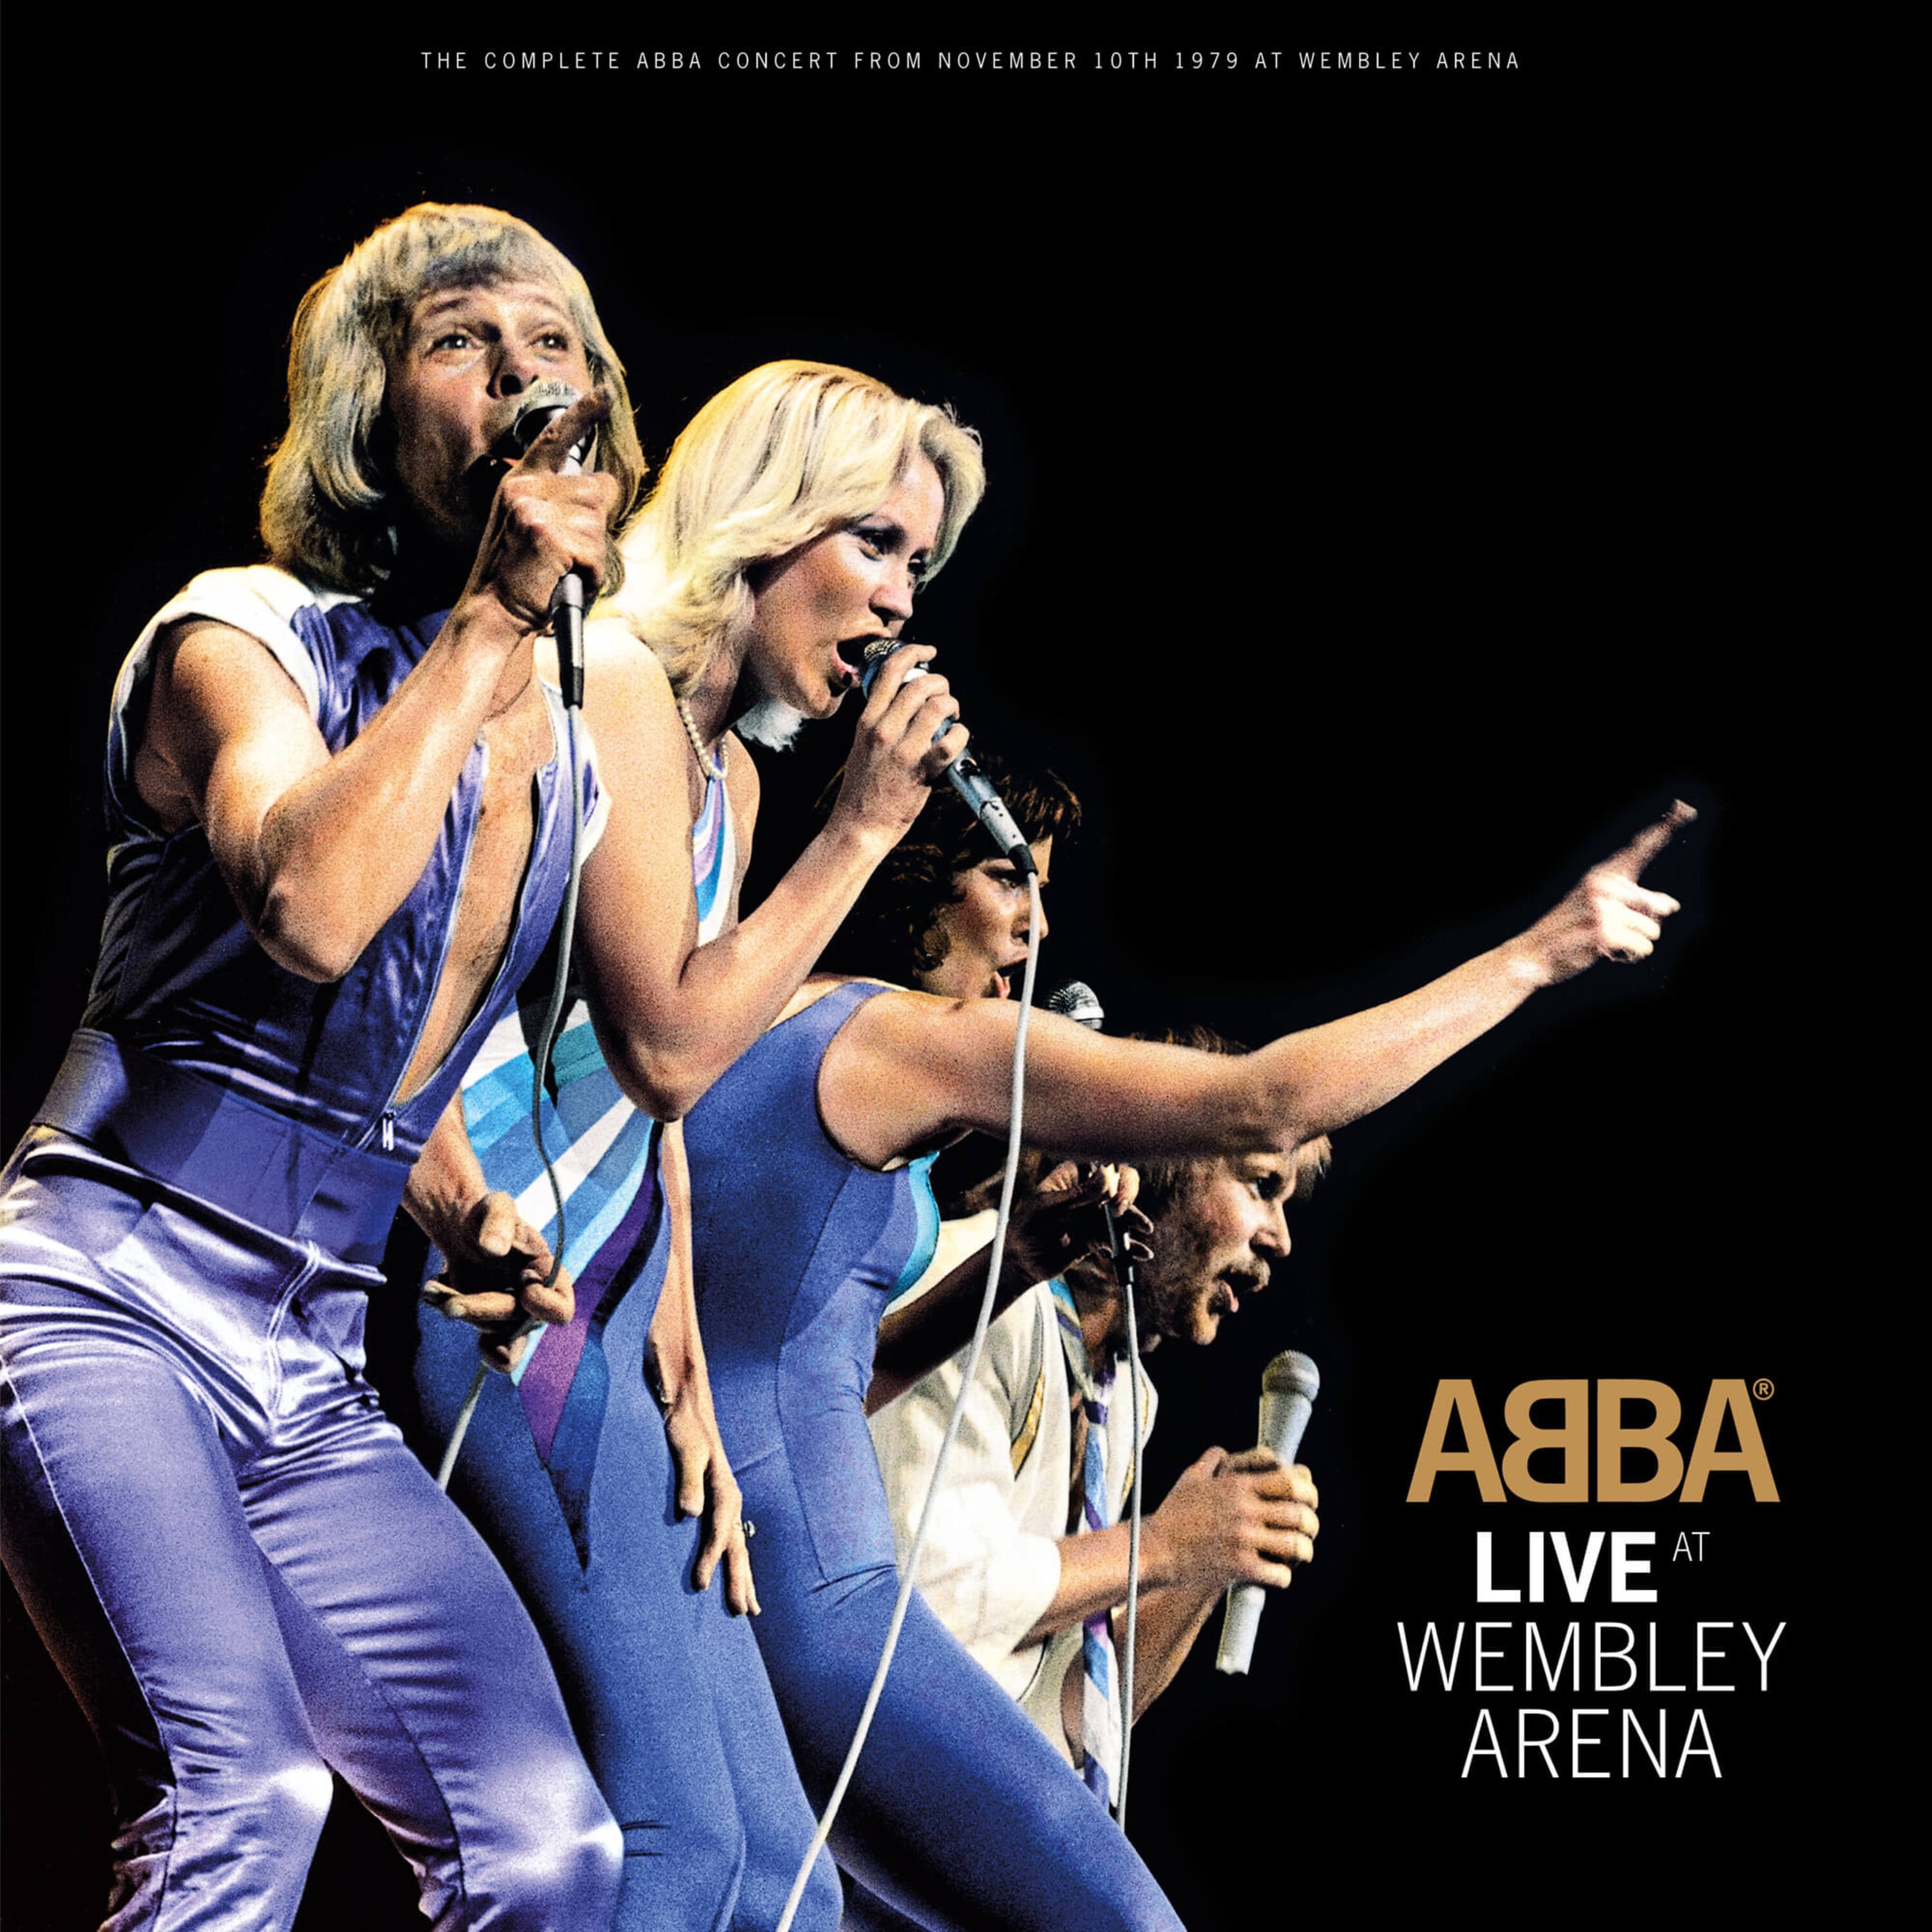 https://images.bravado.de/prod/product-assets/product-asset-data/abba/abba/products/131983/web/294019/image-thumb__294019__3000x3000_original/ABBA-Live-At-Wembley-Ltd-3LP-Vinyl-131983-294019.jpg